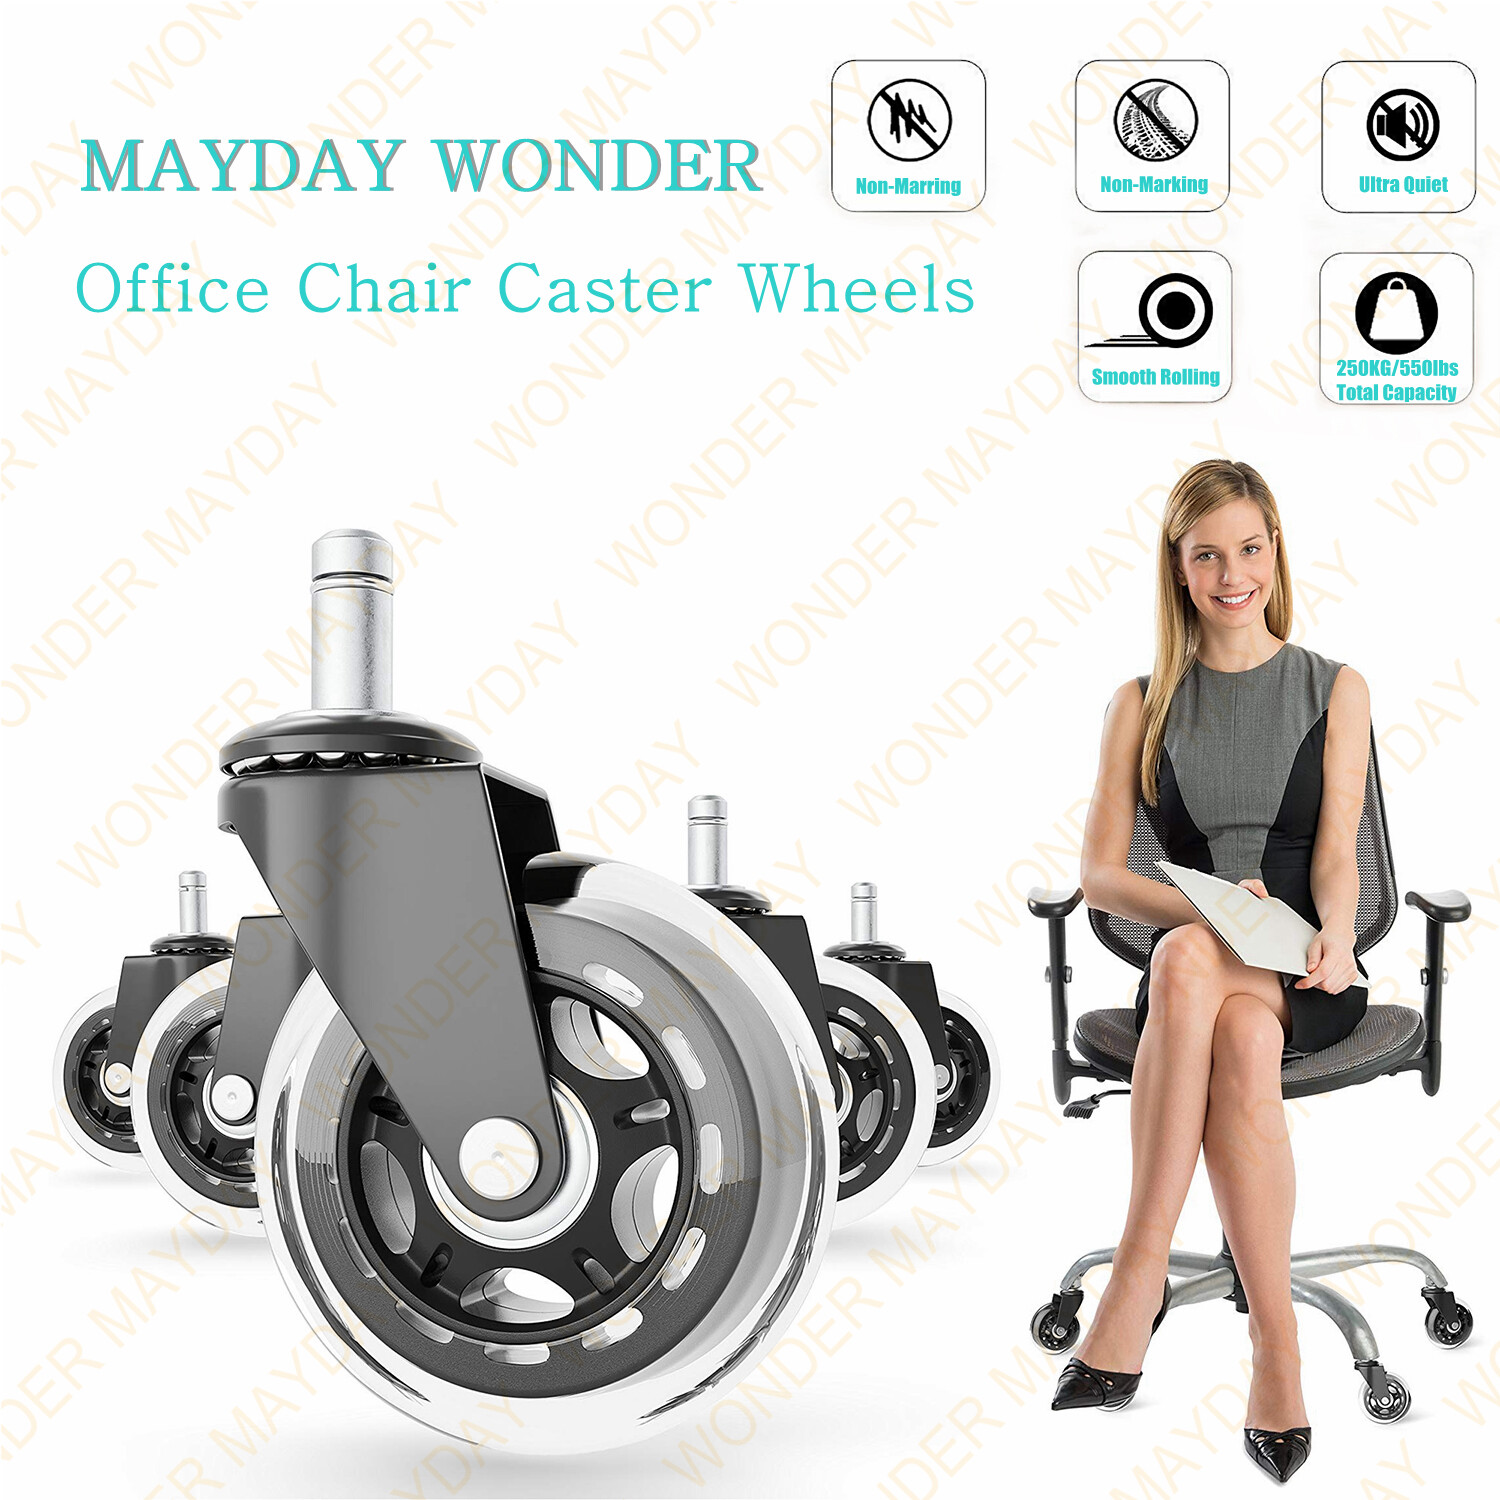 MAYDAY อะไหล่ล้อเก้าอี้สำนักงาน ล้อเก้าอี้สำนักงาน ล้อเก้าอี้ ล้อ อะไหล่ล้อเก้าอี้ แบบหล่อเป็นชิ้นเดียว ไม่มีรอยต่อ หมุนรอบ 360องศา พร้อมจัดส่ง Office Chair Caster Polyurethane Wheels 5 pcs [In Stock/Fast Shipping ]